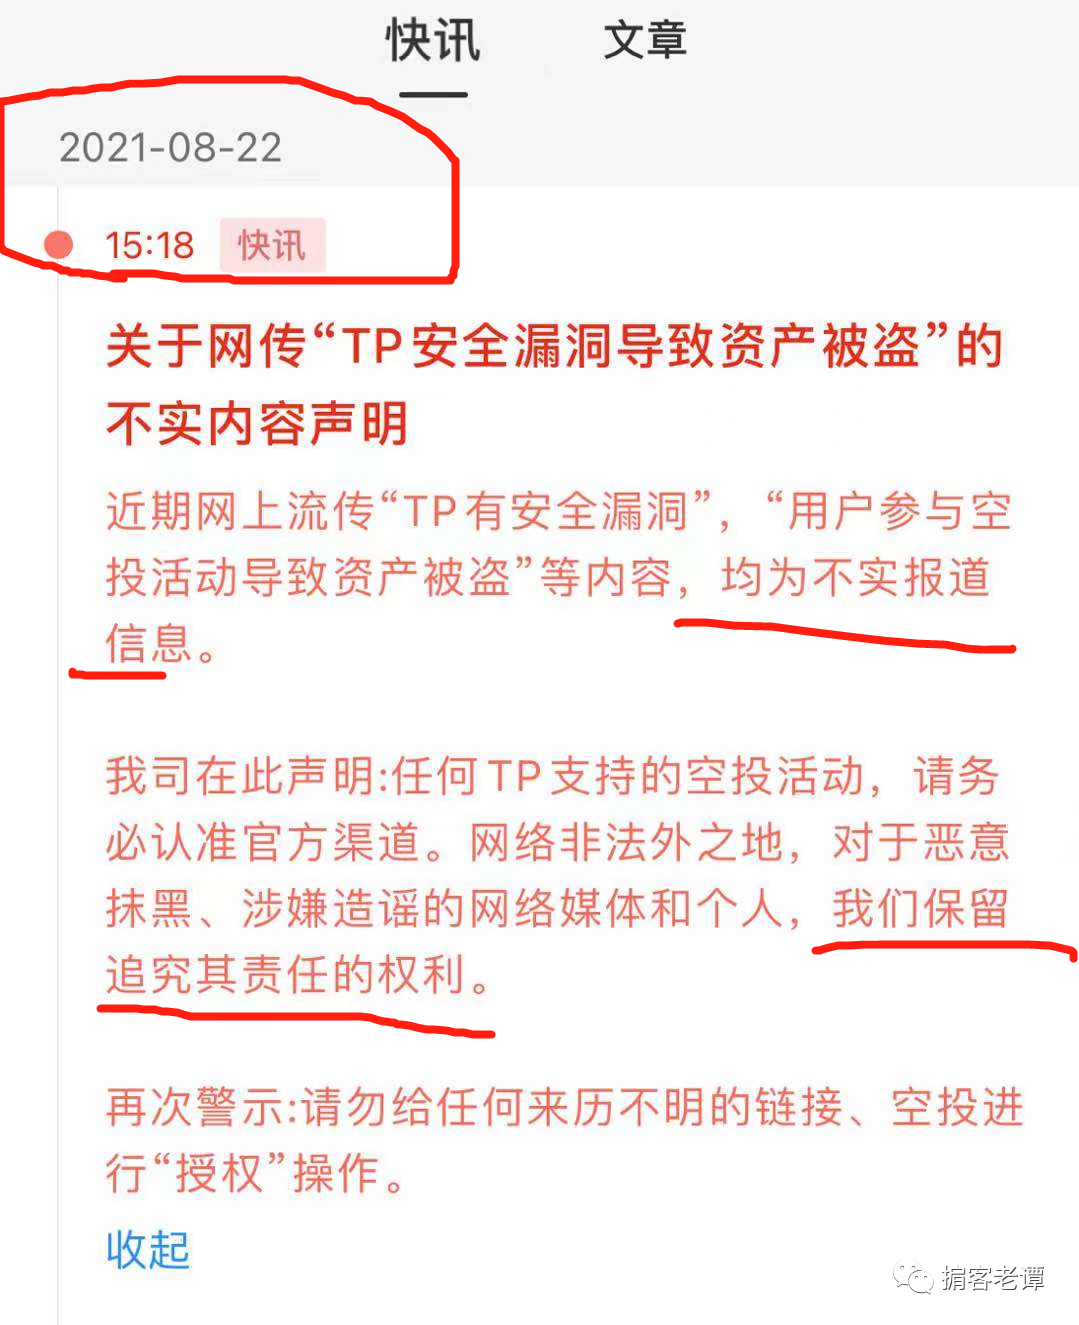 TP官方网站：TP钱包技术团队圈用户13个亿终于露馅了！）